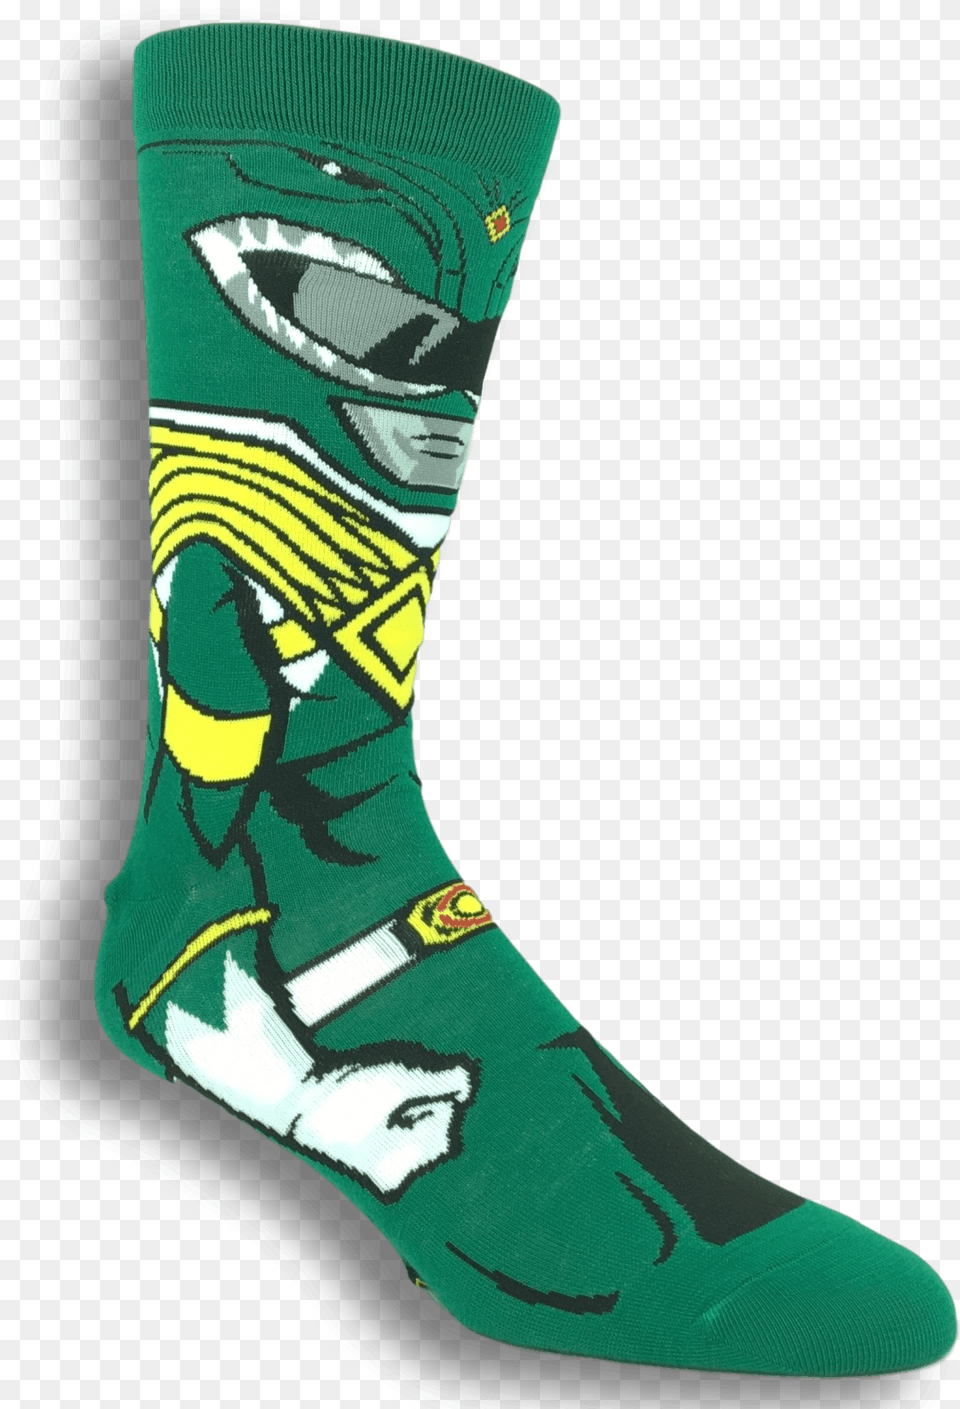 Power Rangers Green Ranger 360 Socks Fictional Character, Clothing, Hosiery, Sock Png Image